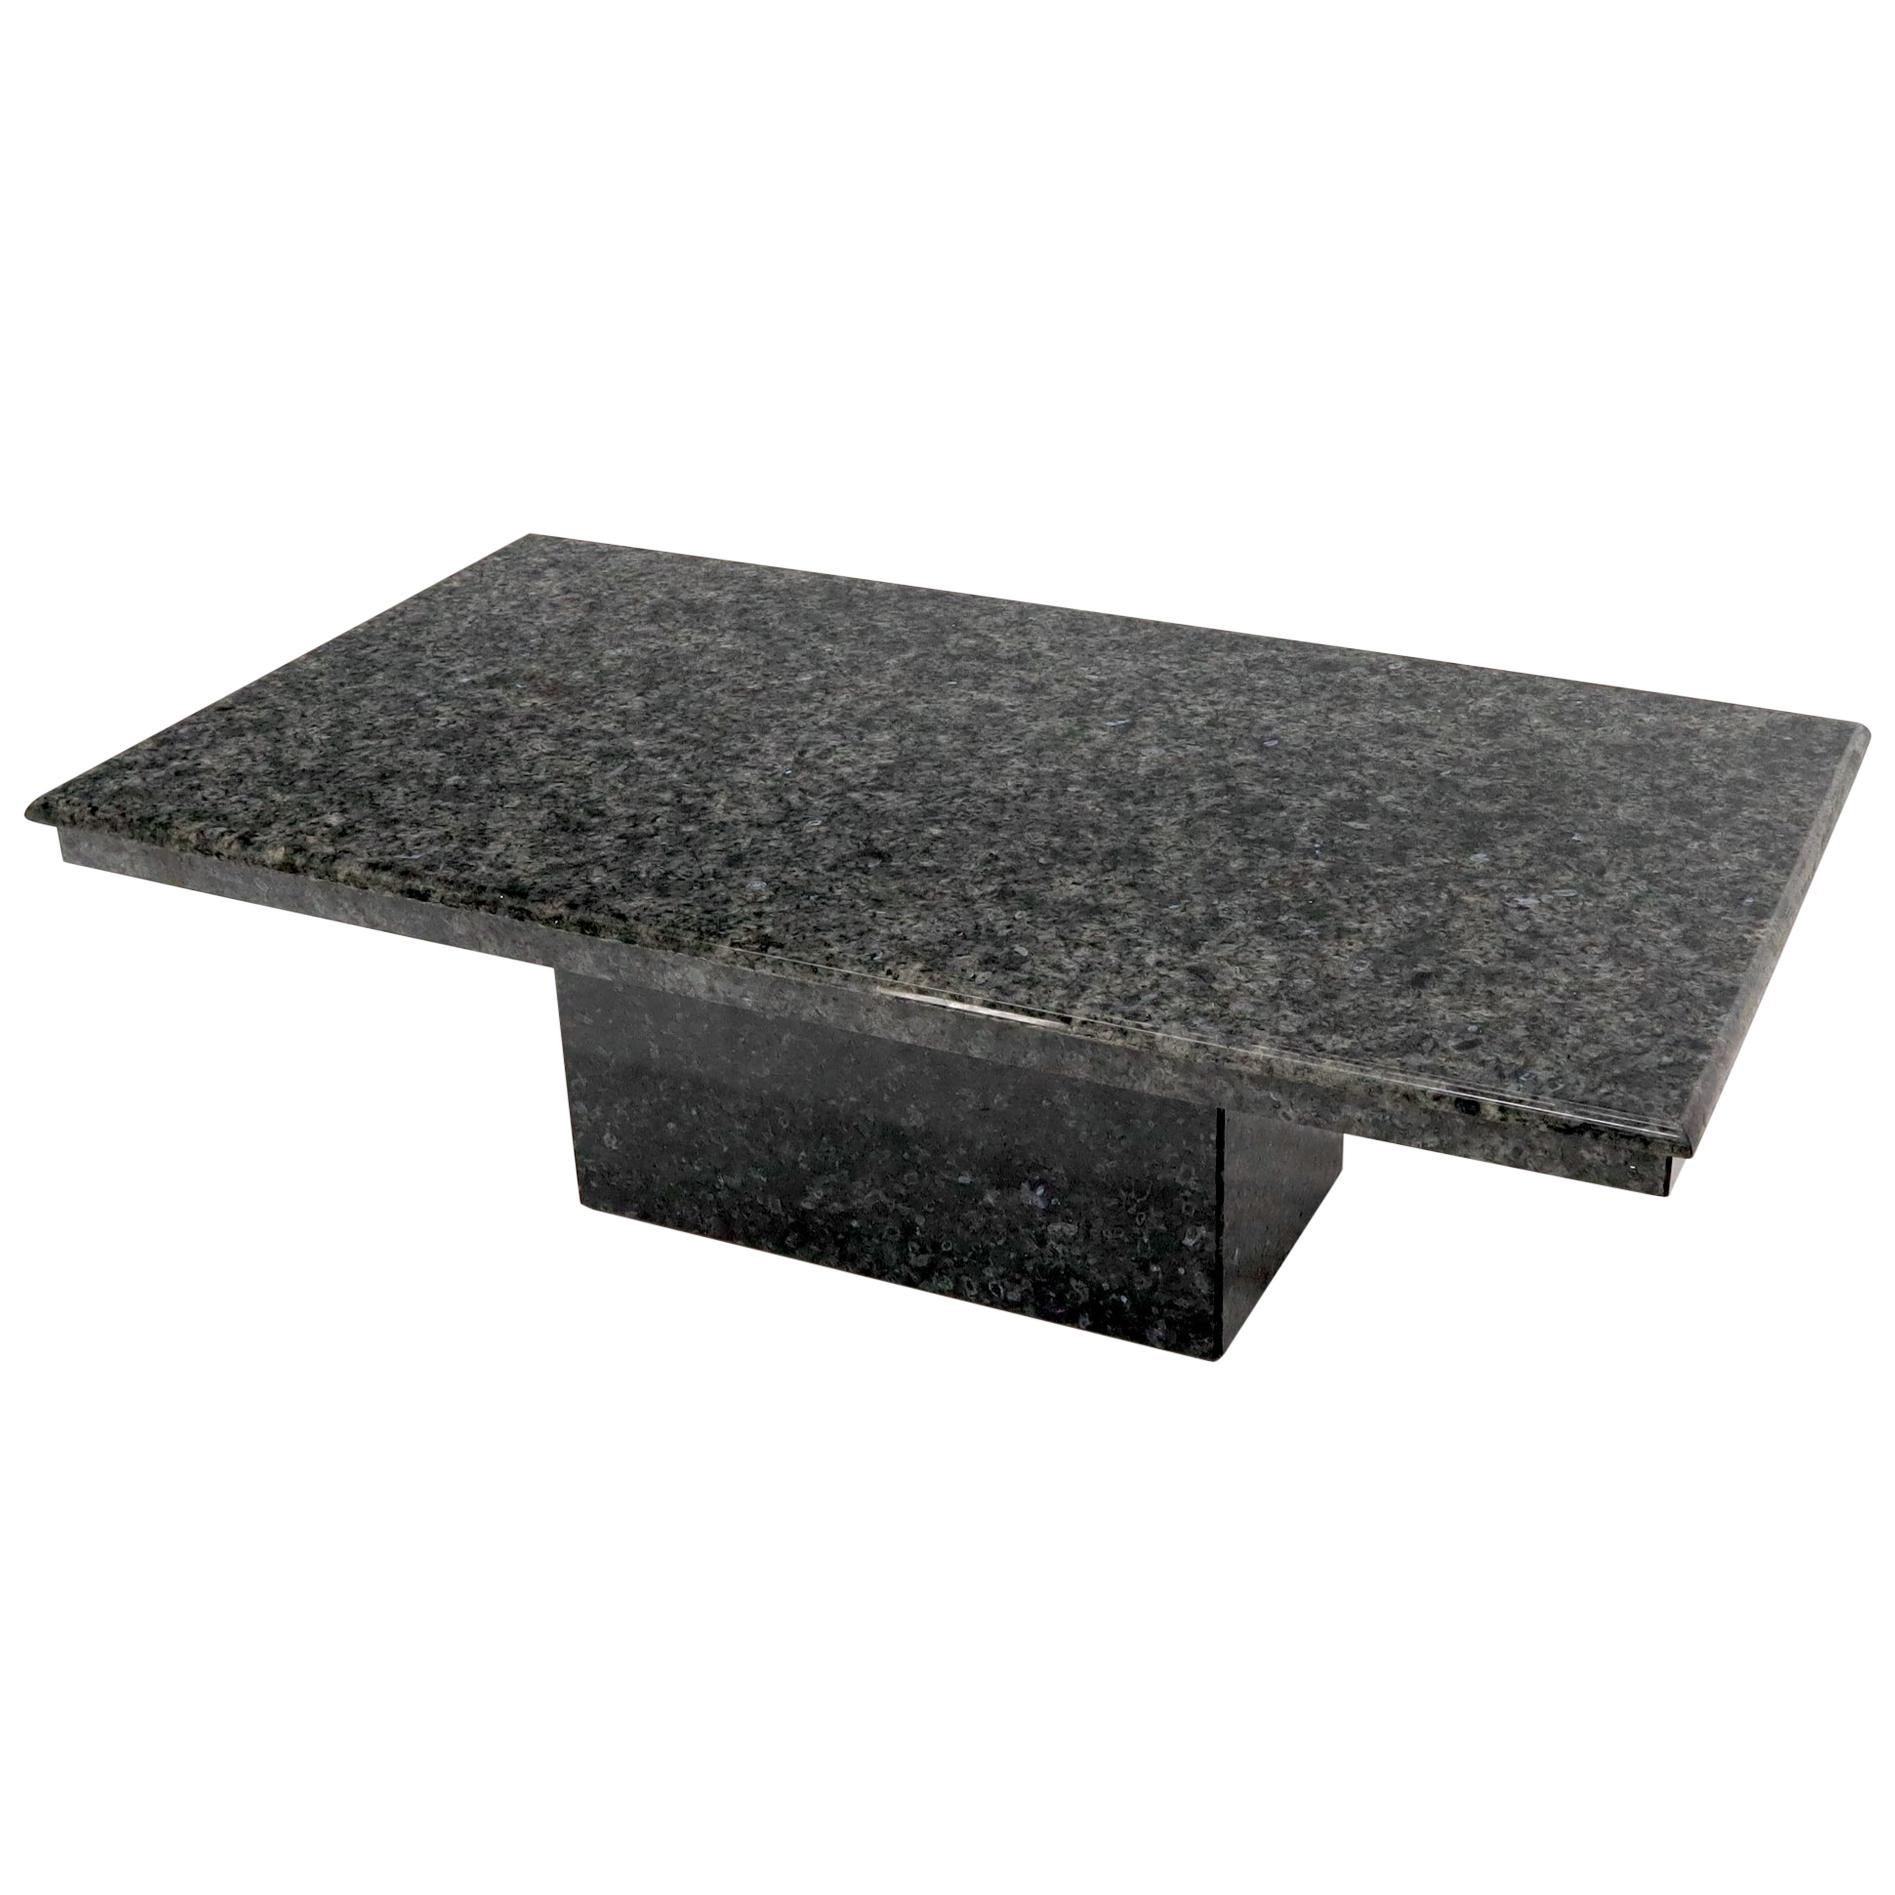 Medium to Large Black Granite Rectangular Mid-Century Modern Coffee Table For Sale